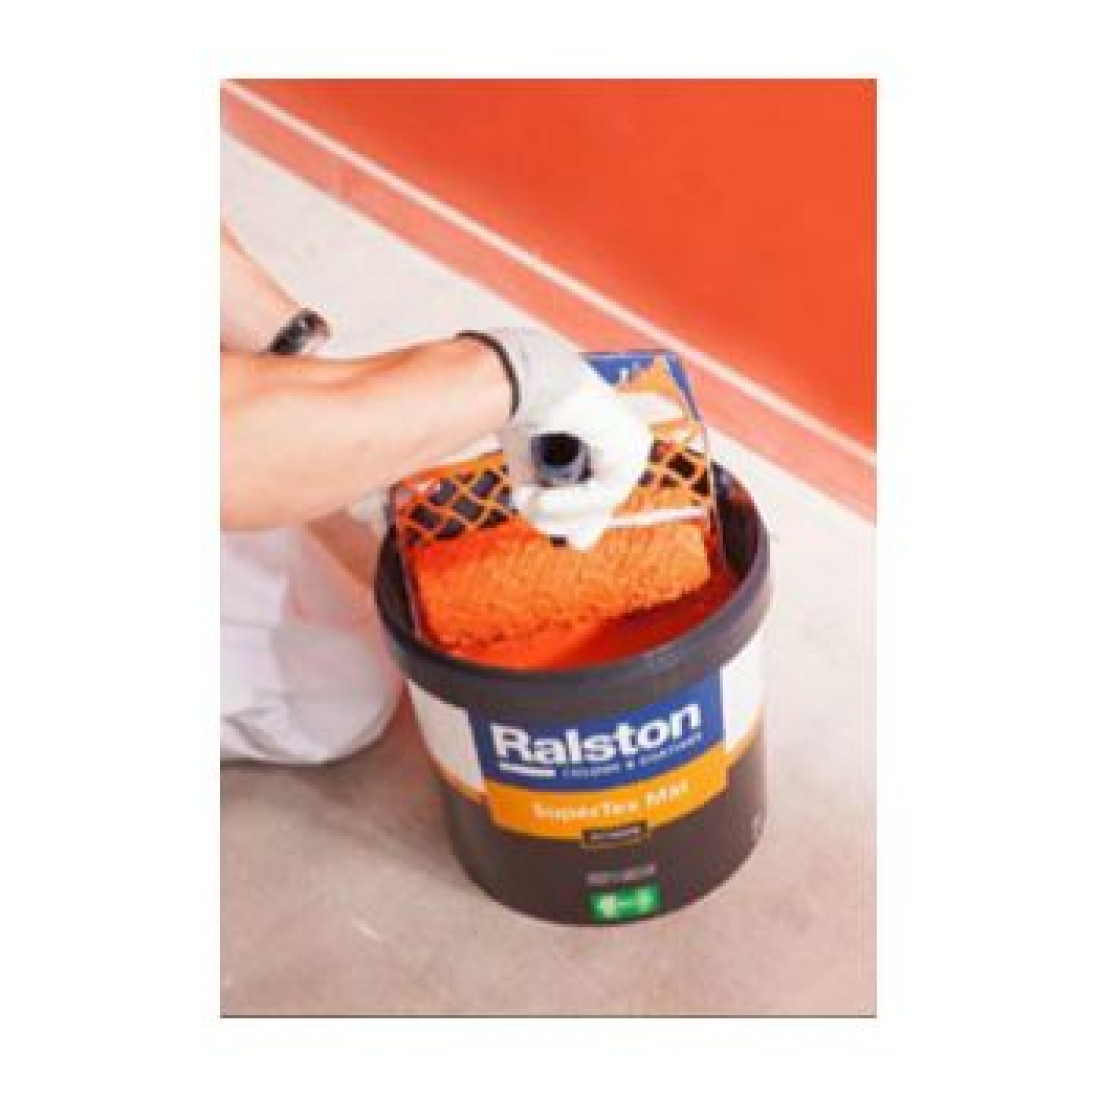 EKO opakowania farb Ralston już od lipca 2014 r.